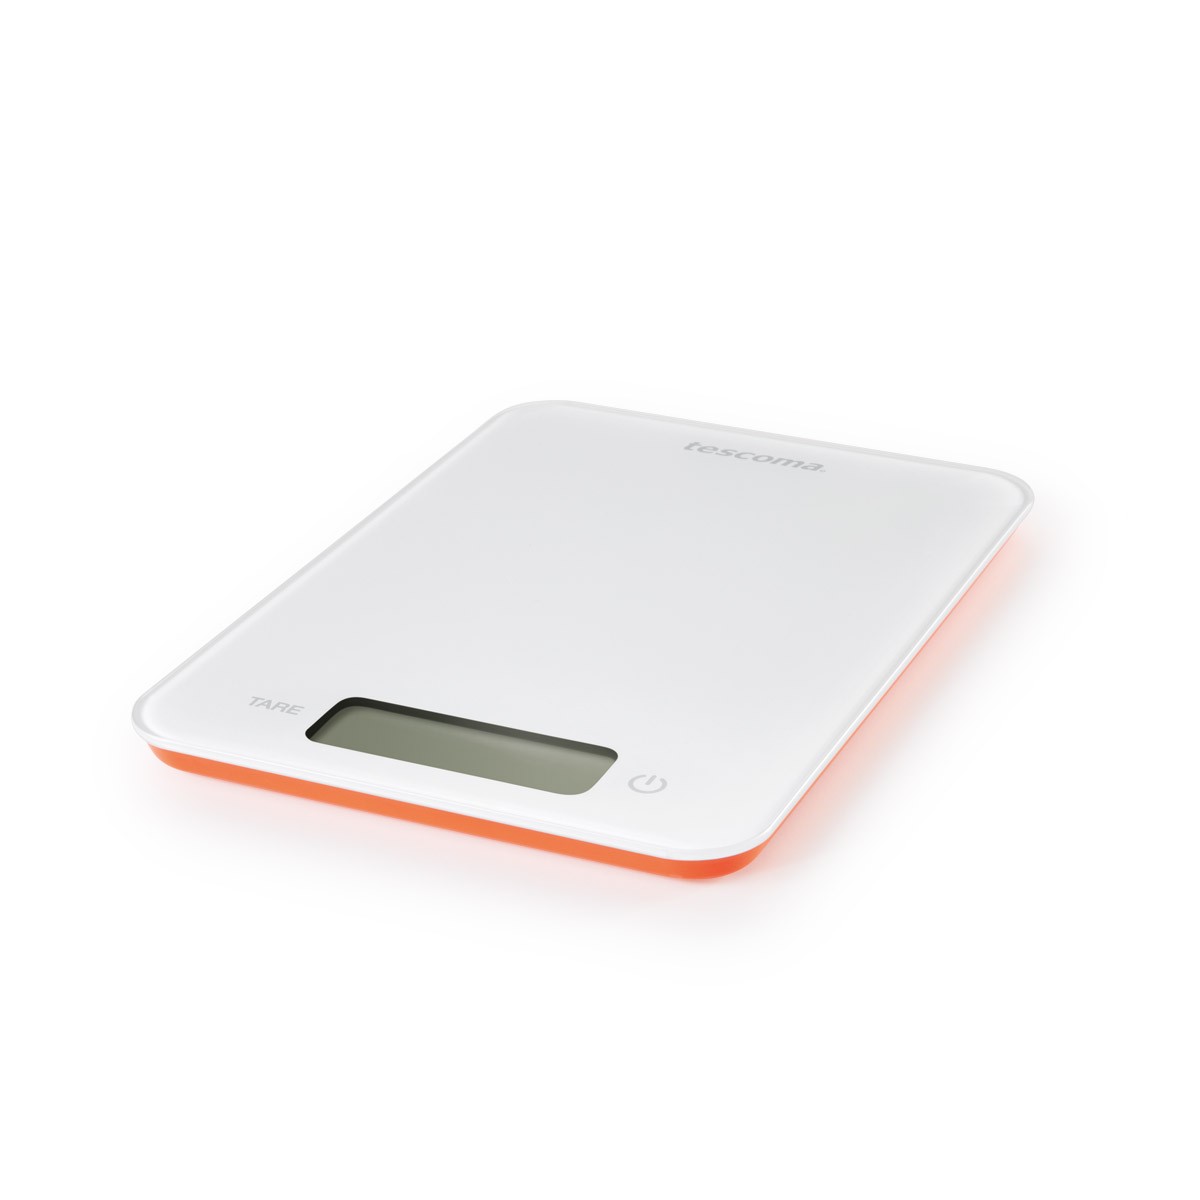 Digitale Küchenwaage ACCURA 5.0 kg